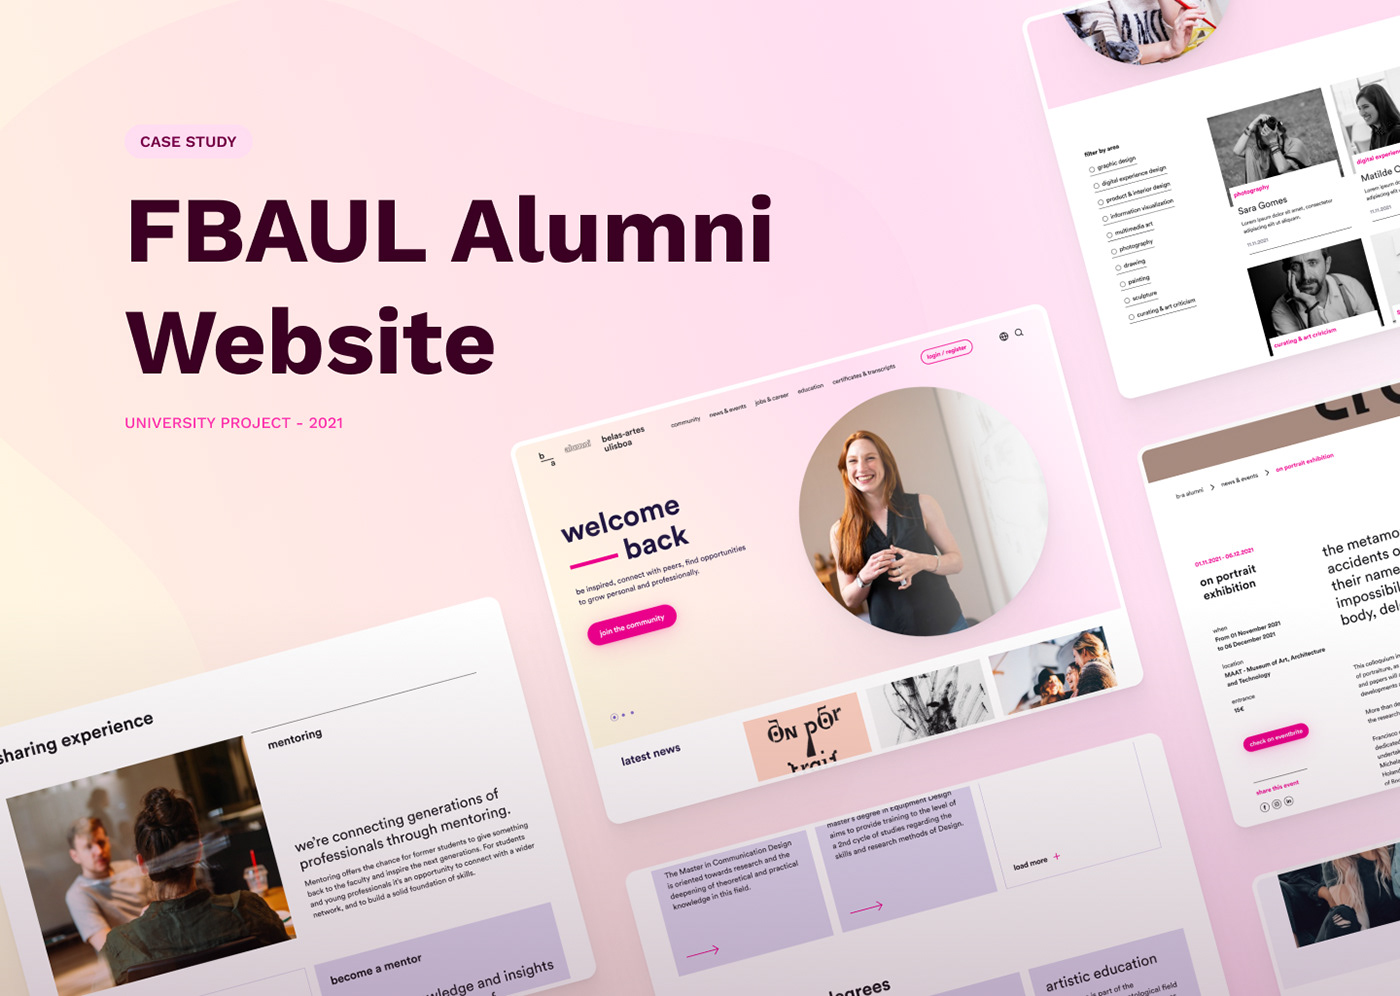 Case study.
Fbaul alumni website.
University project - 2021